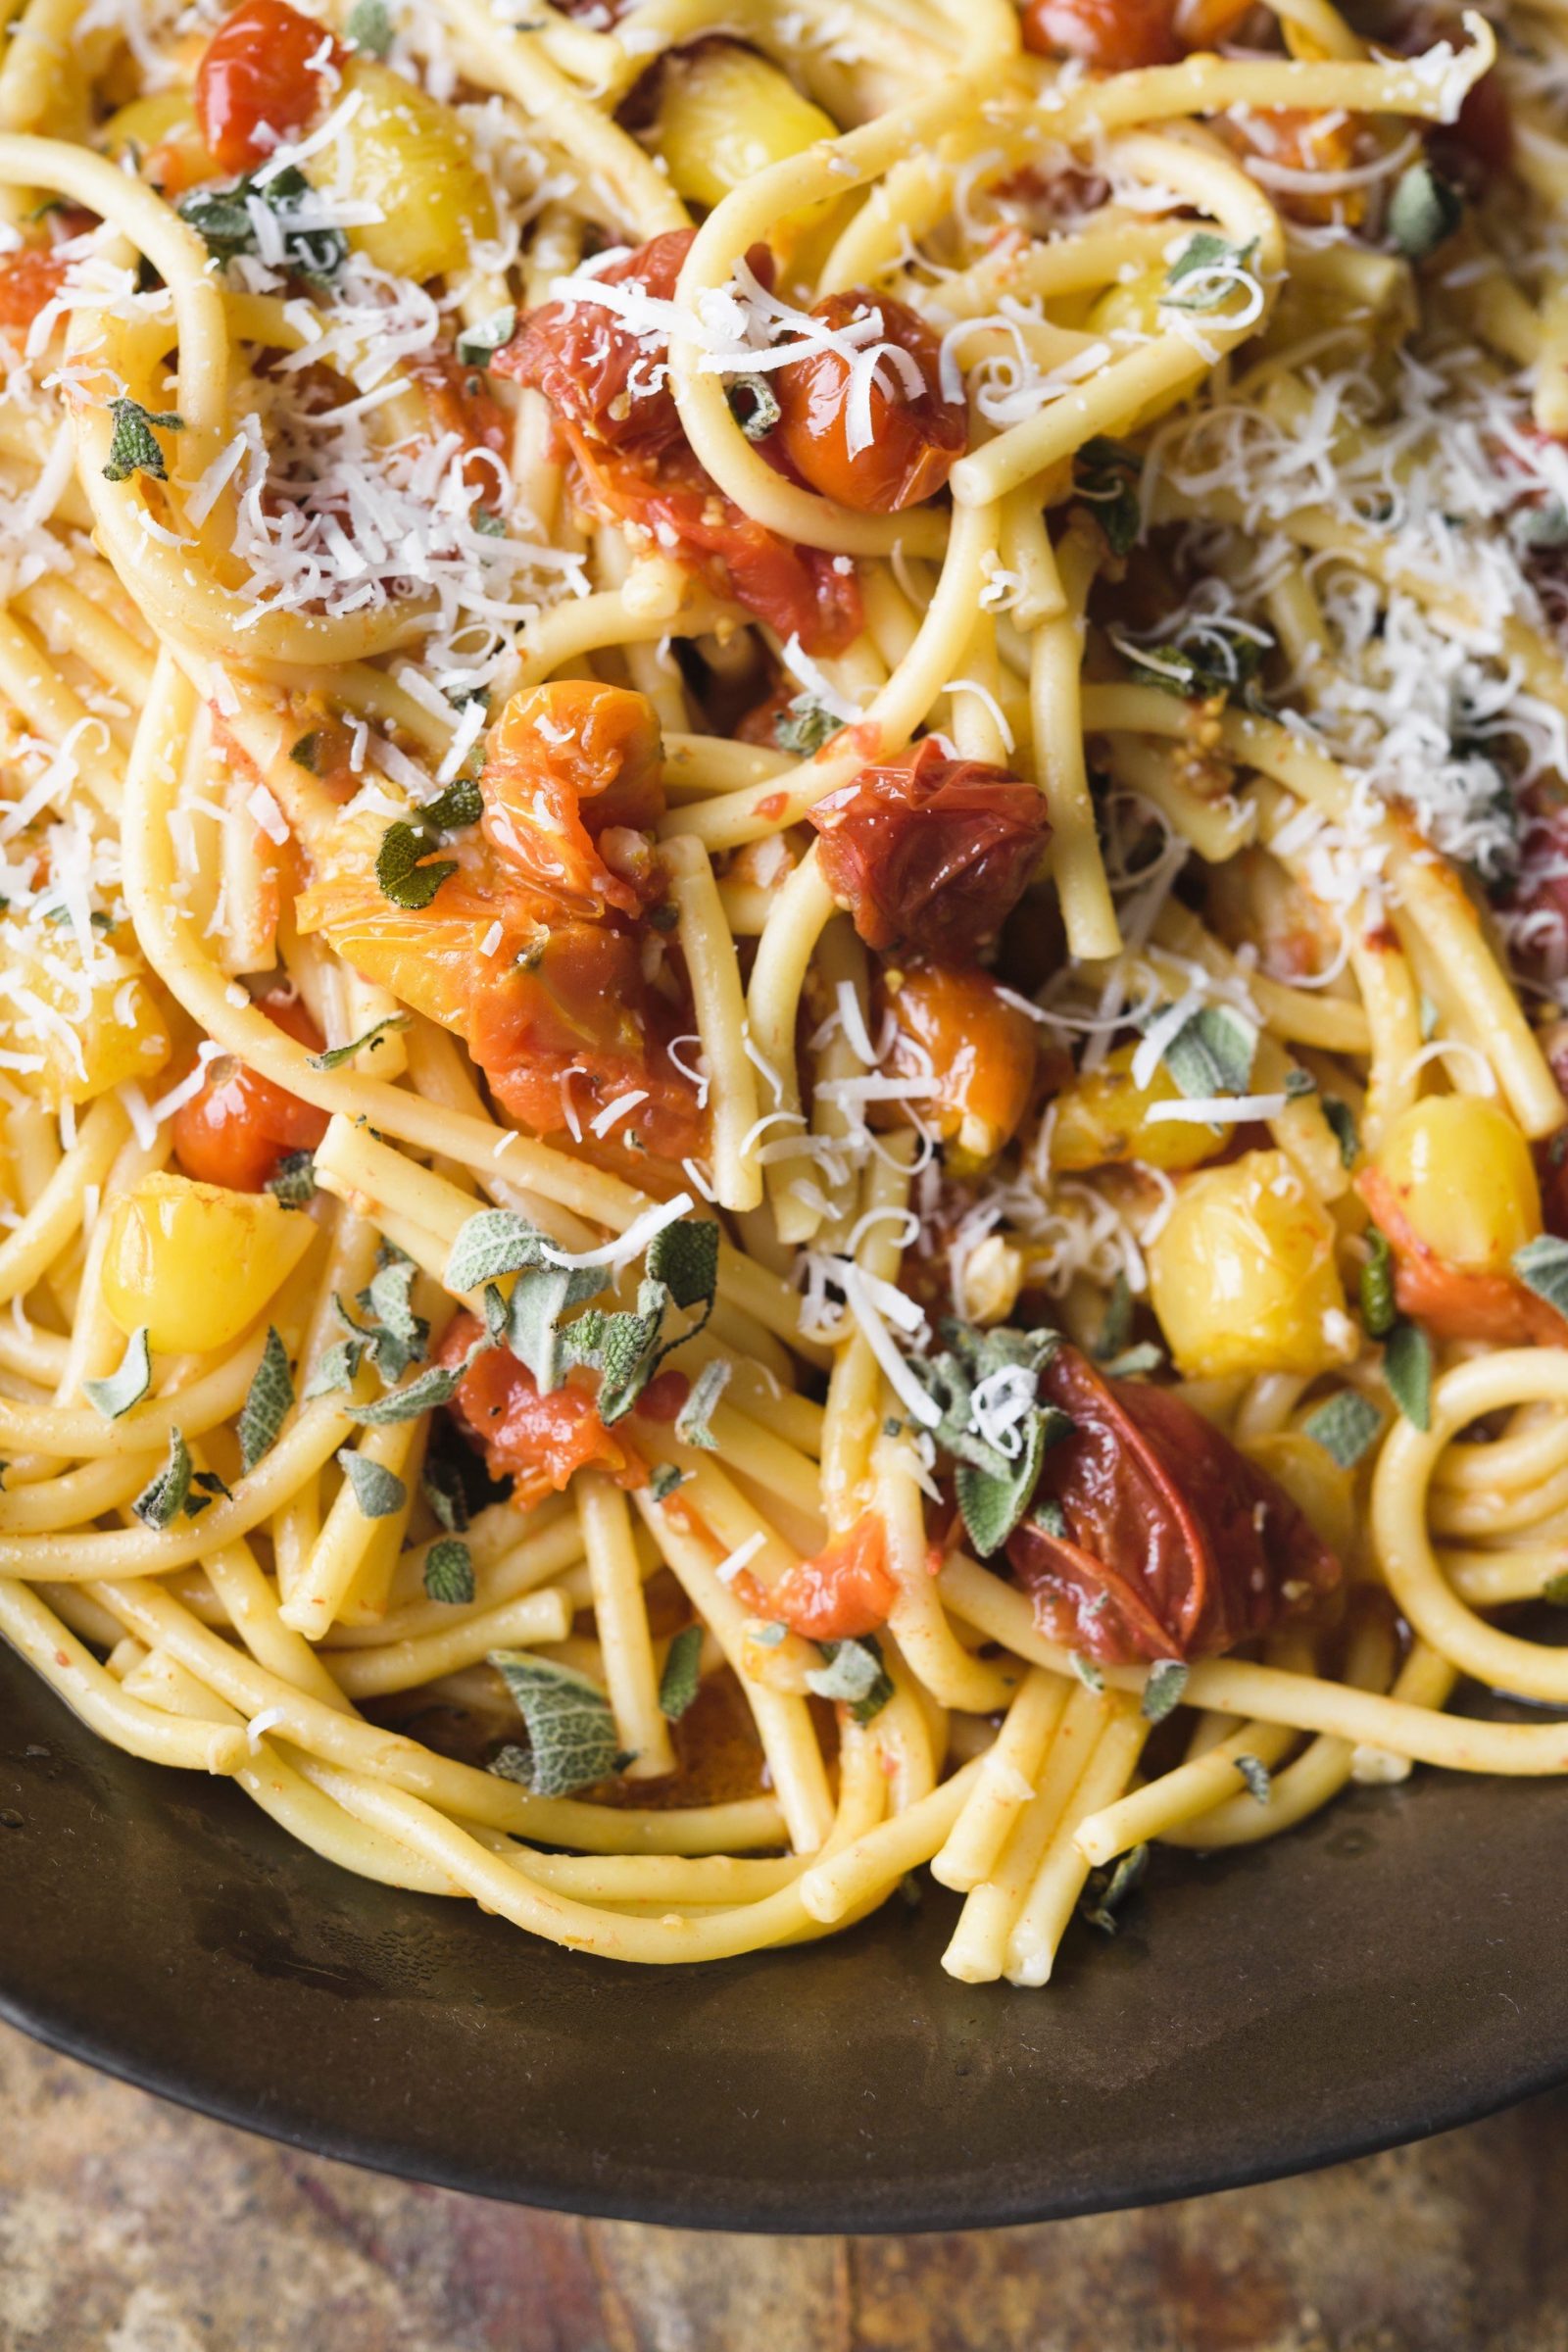 Yotam Ottolenghi's recipe to make pasta less boring